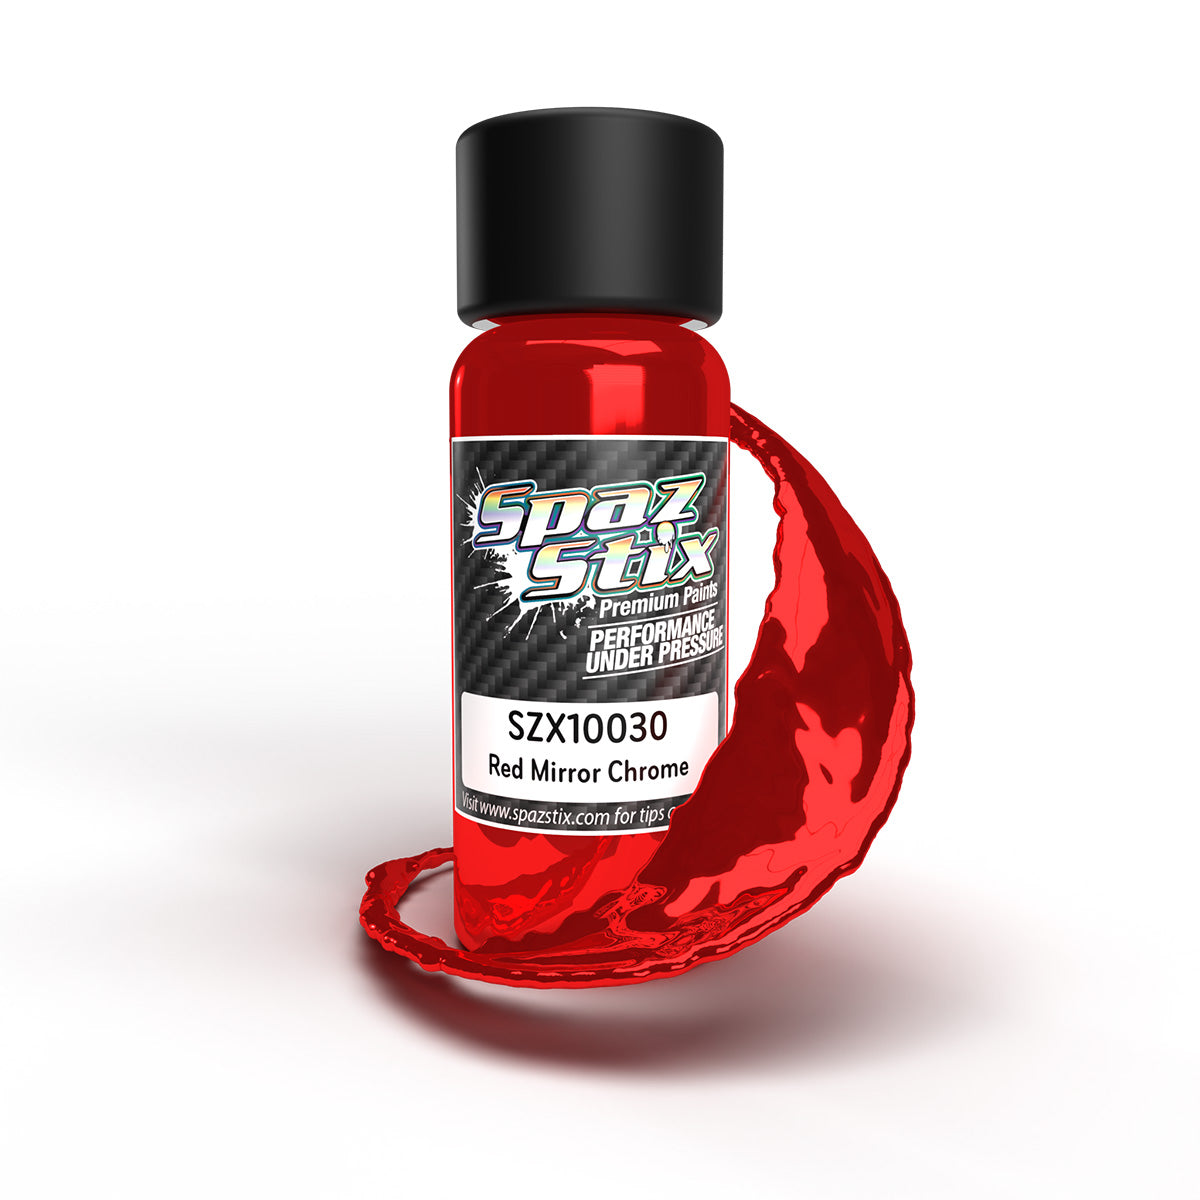 SPAZ STIX 10030 Red Mirror Chrome Airbrush Ready Paint, 2oz Bottle